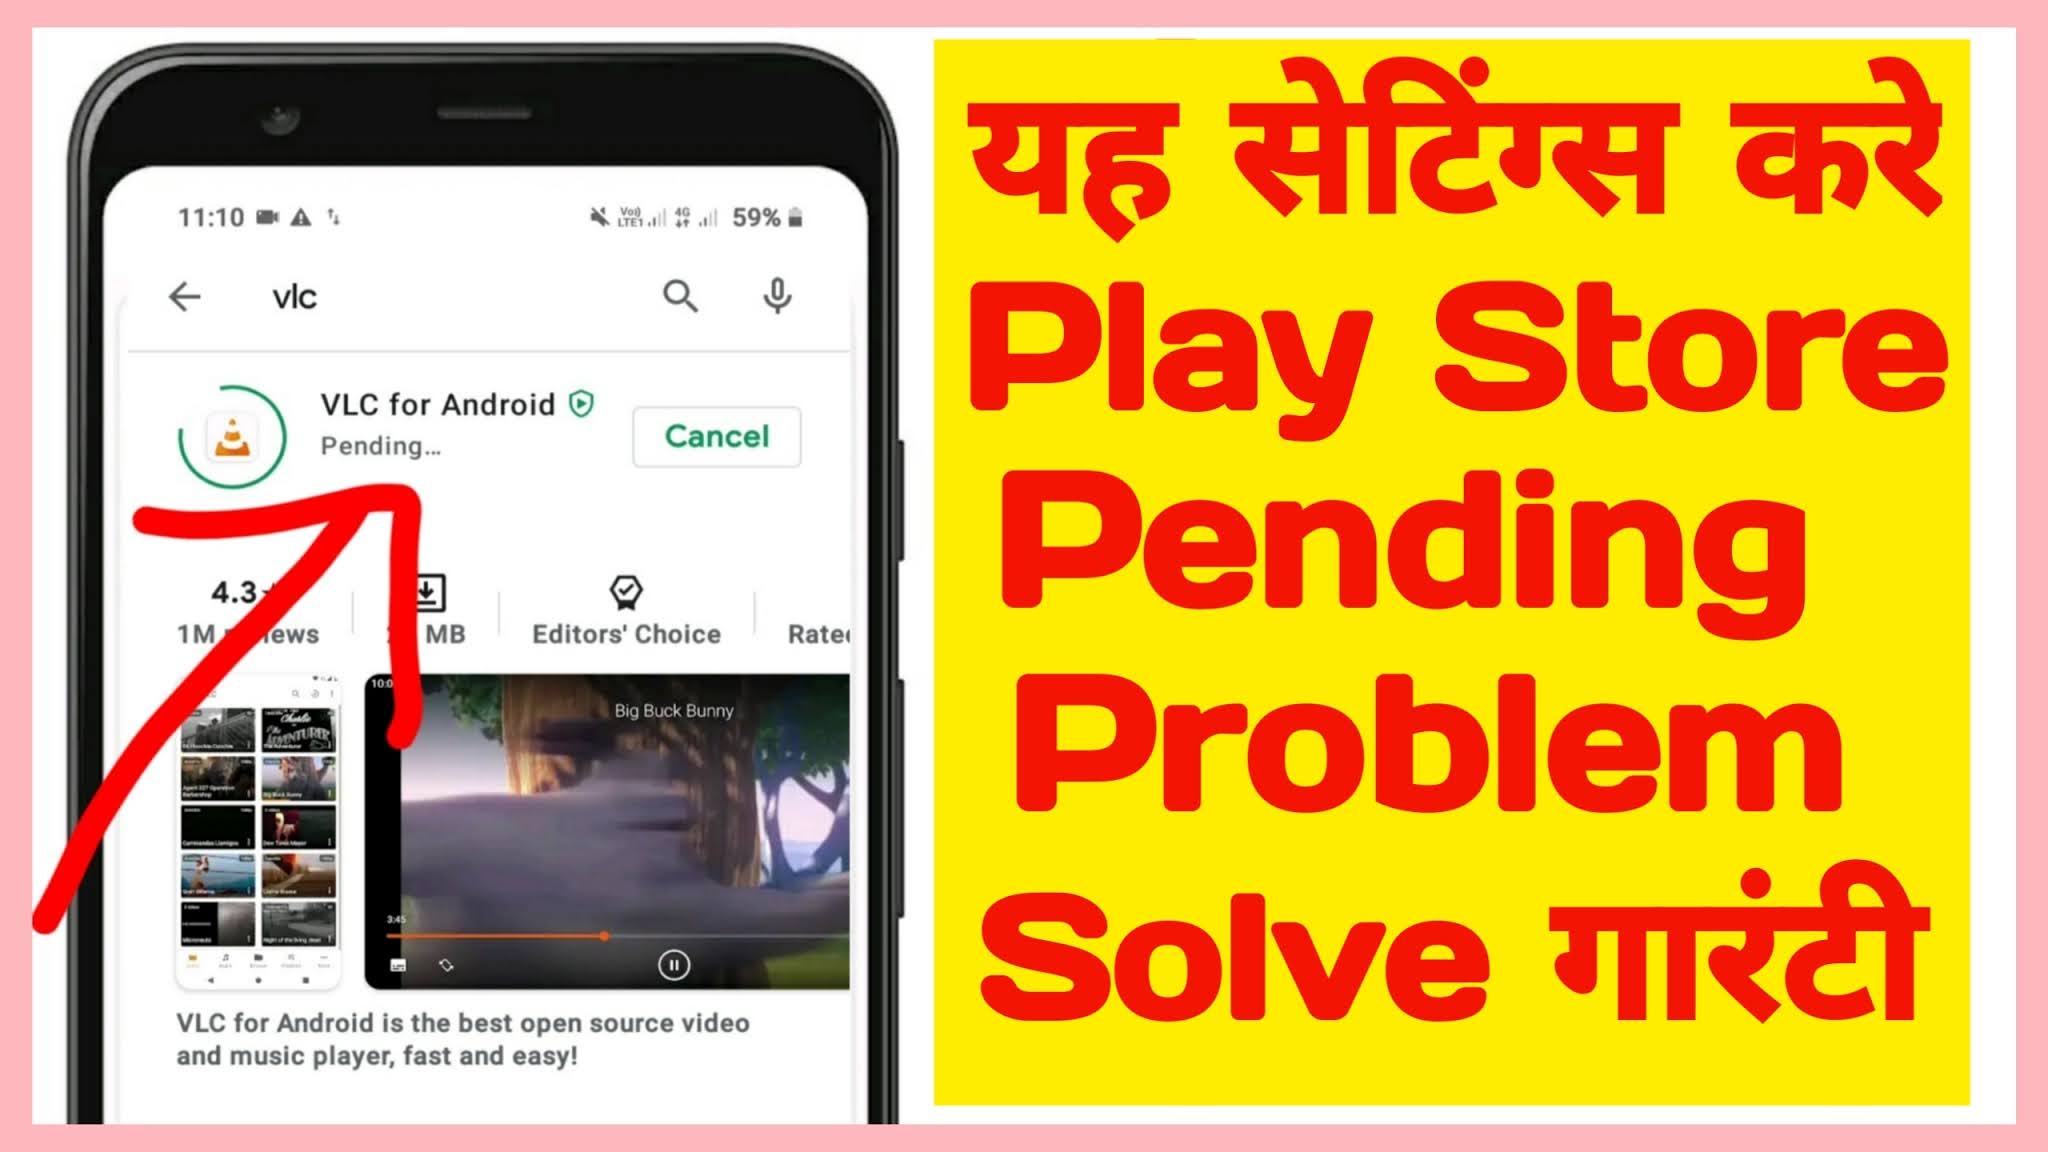 Play Store Se App Download Nahi Ho Raha Hai || Play Store Pending Problem